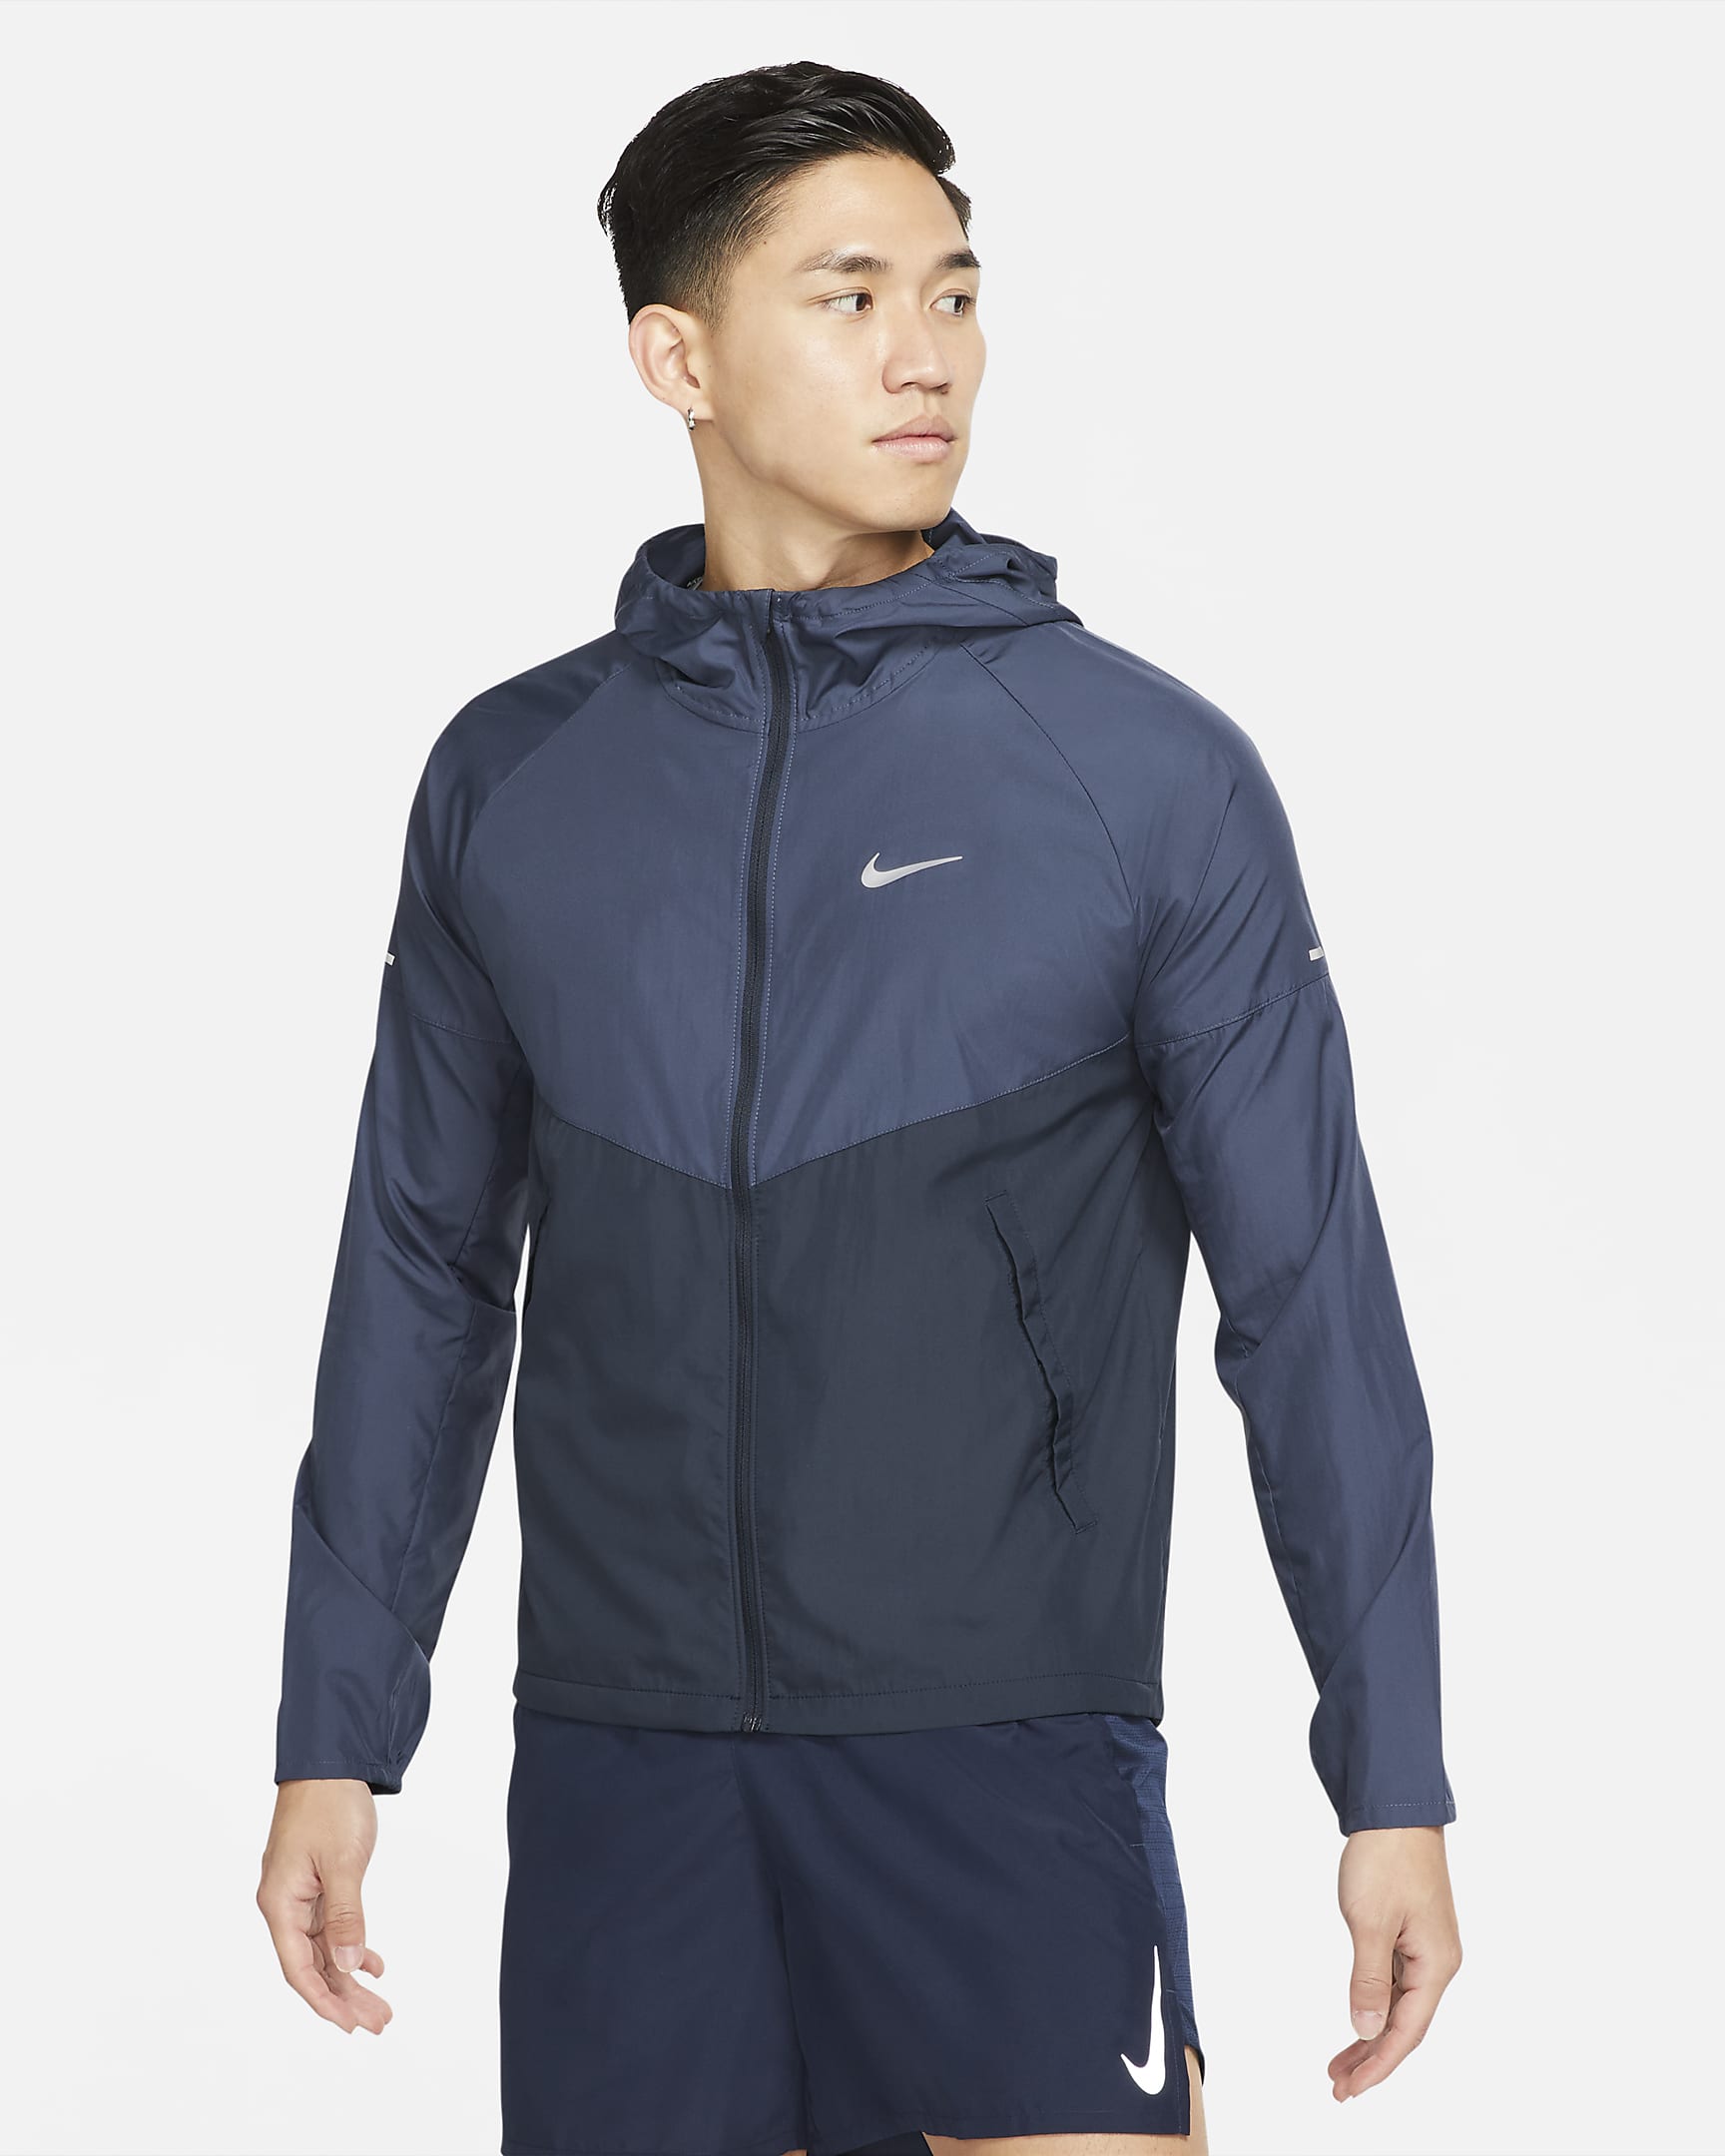 Nike Repel Miler Men's Running Jacket. Nike SG